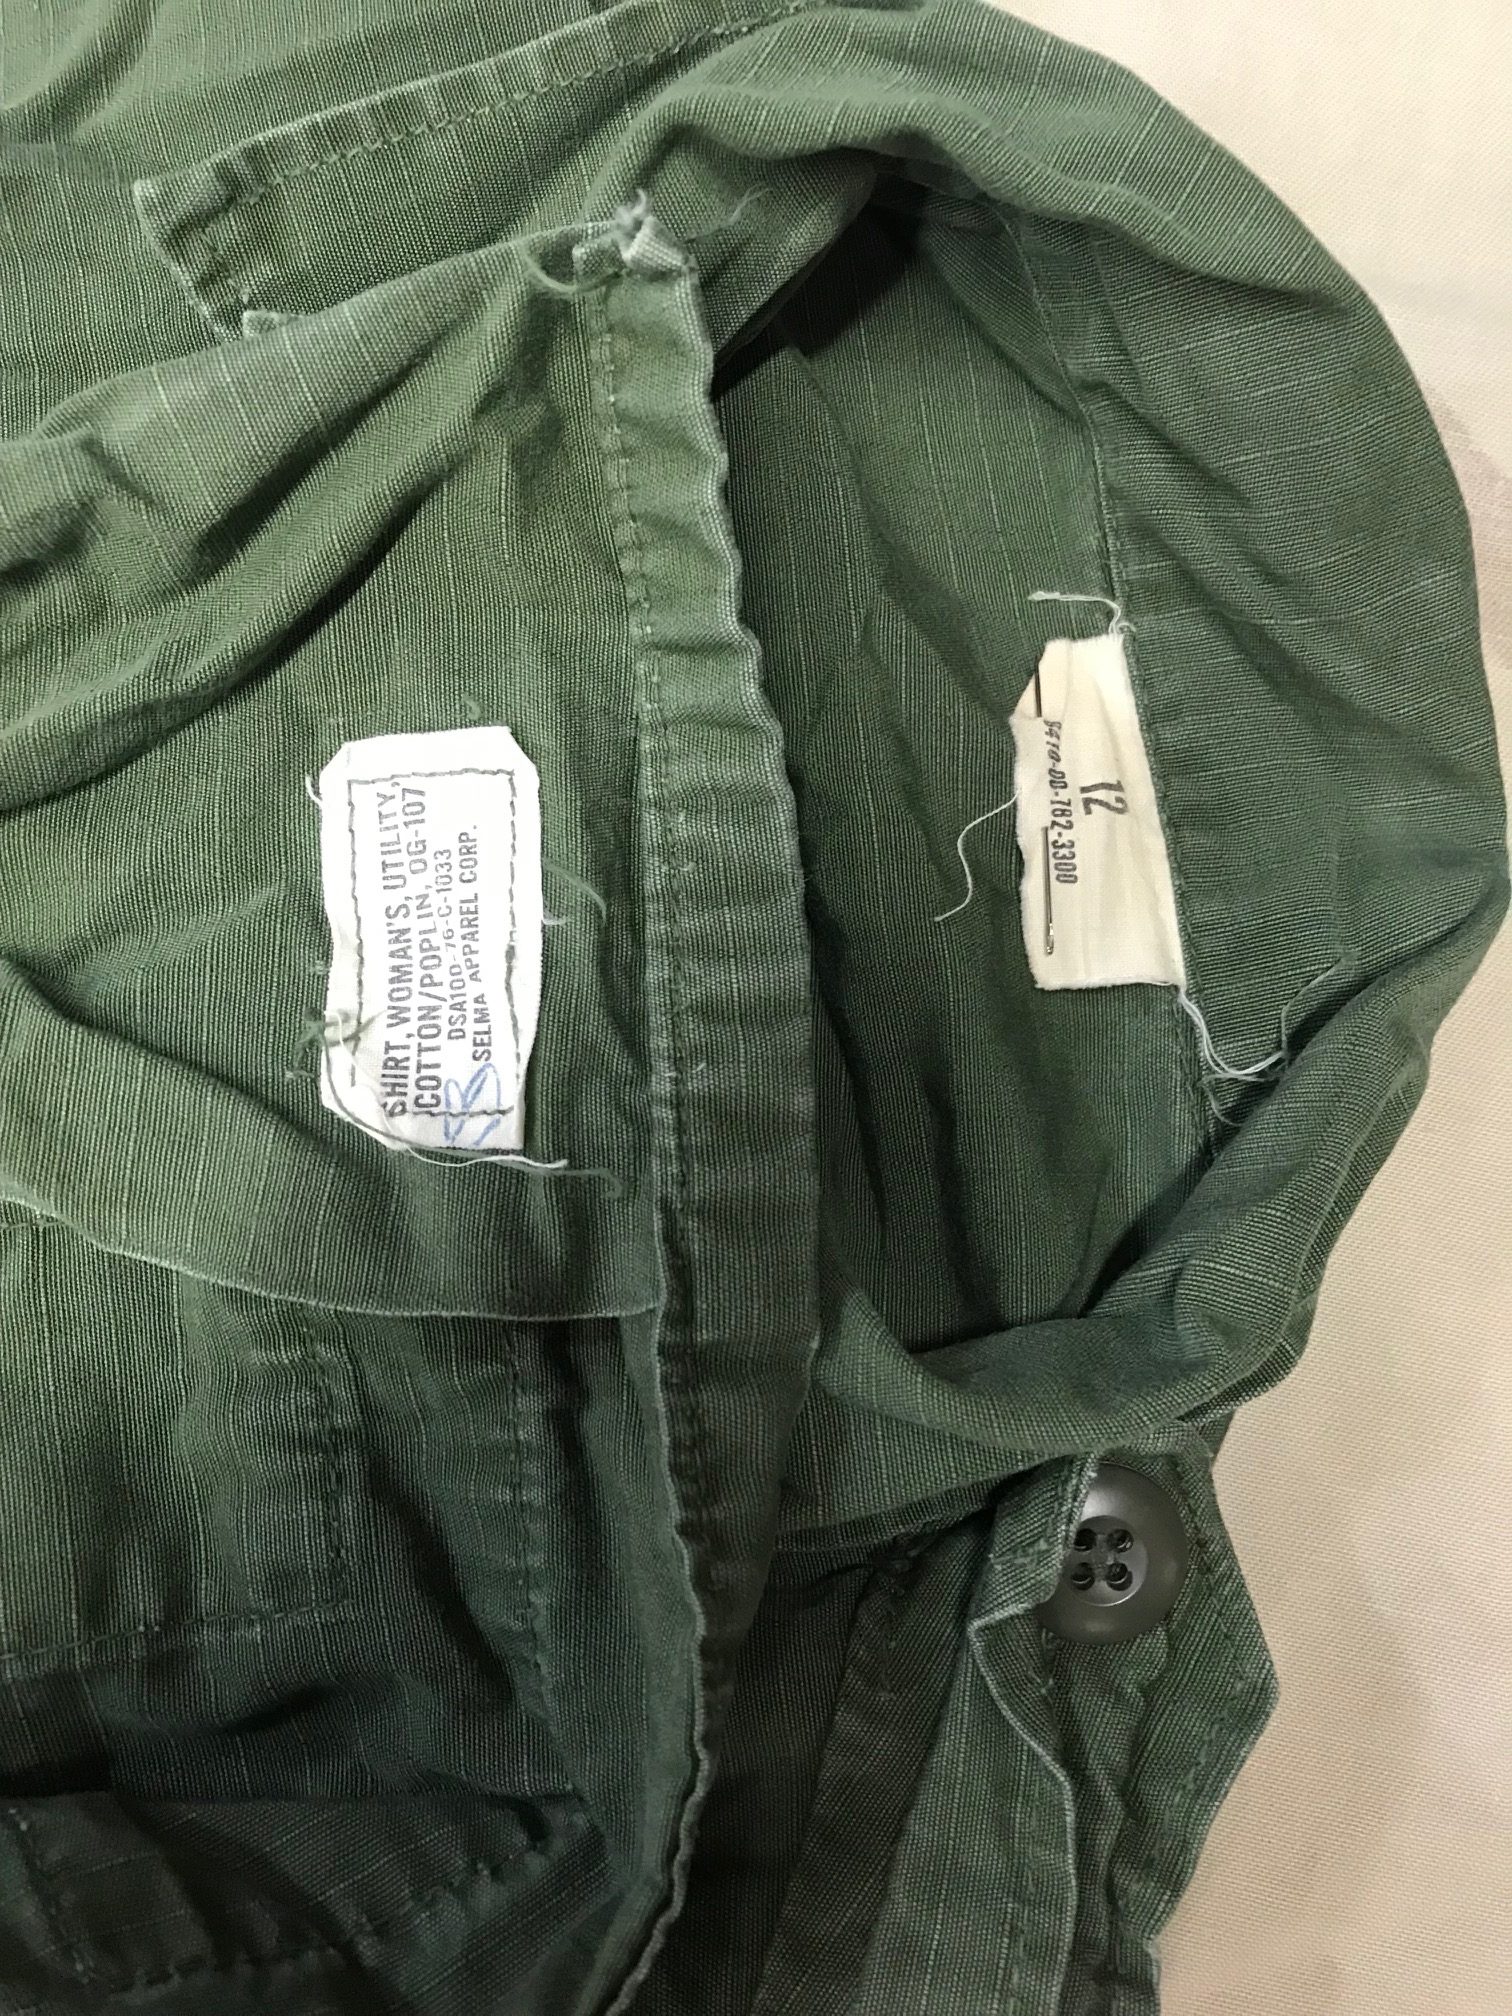 Women's Jungle shirt bottom pocket used r/s size 12 - Omahas Army Navy ...